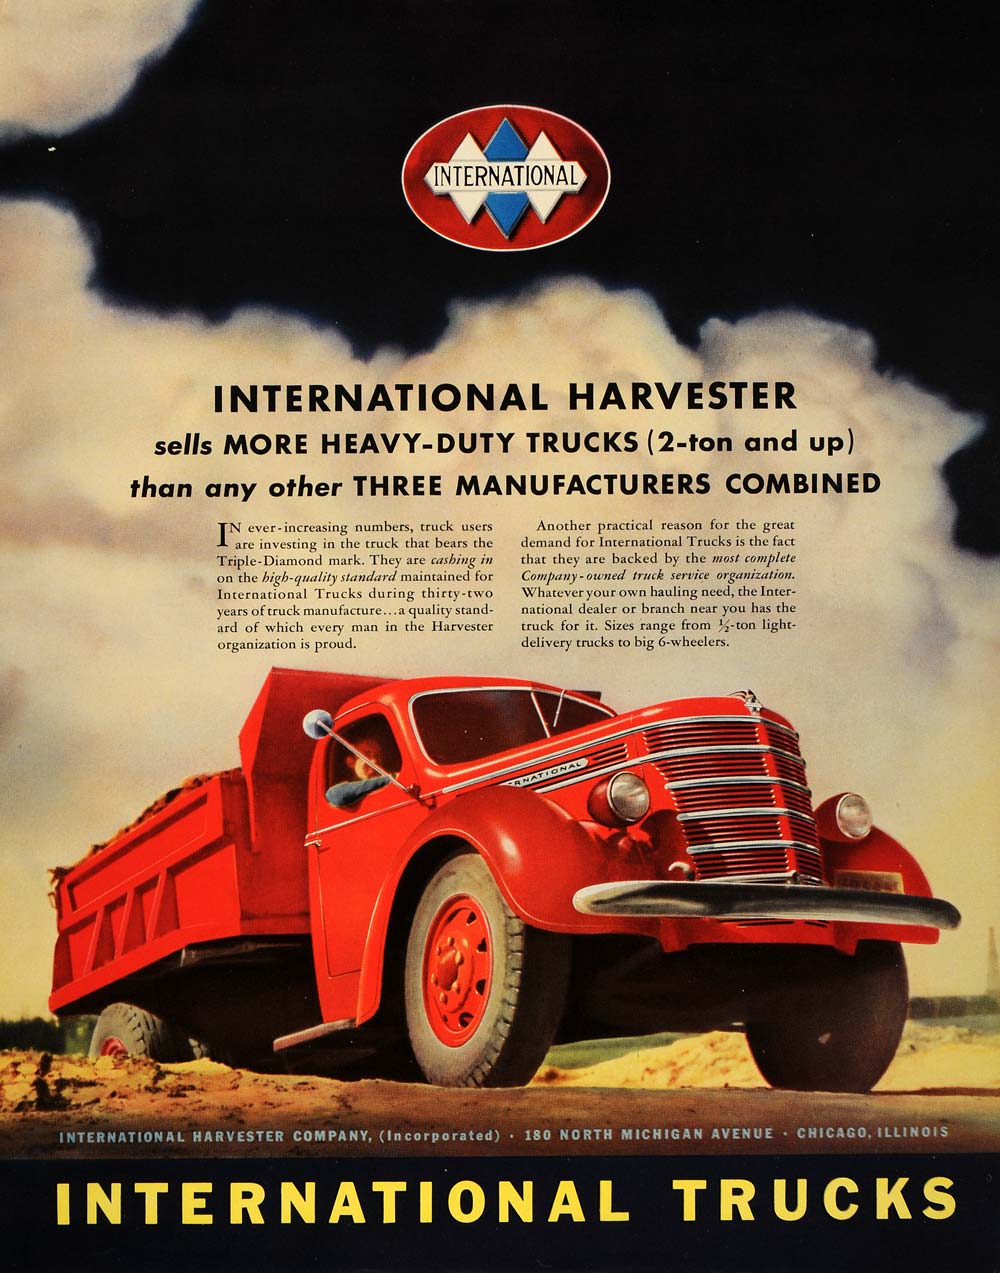 1939 Ad International Harvester Company Red Dump Truck - ORIGINAL FT6